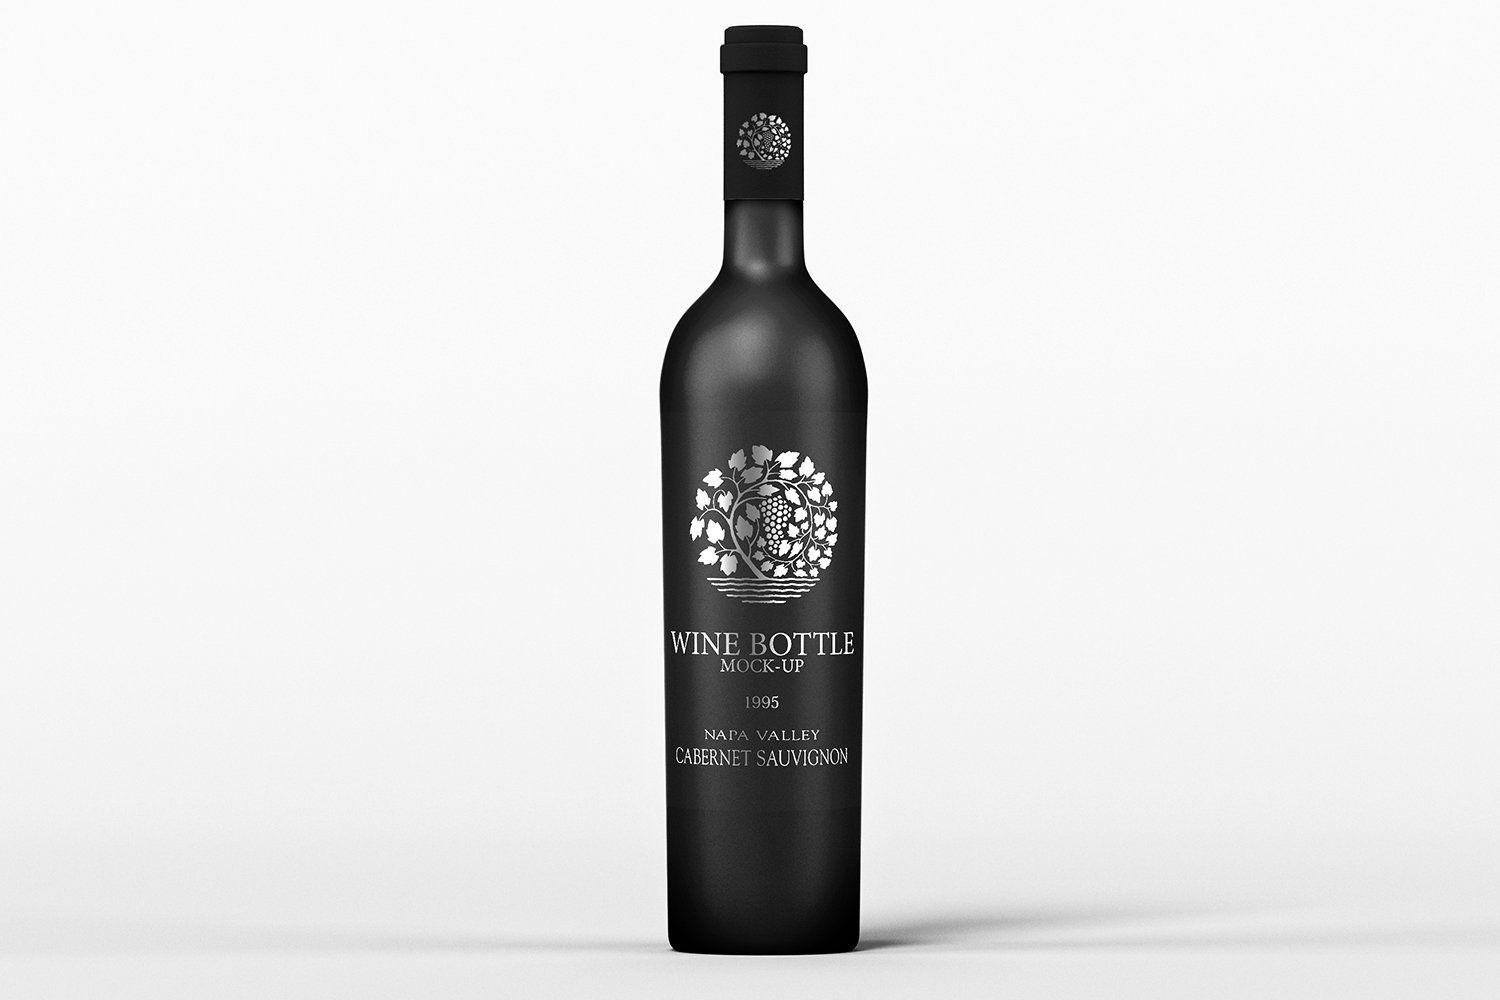 Black matte bottle with white flower label.